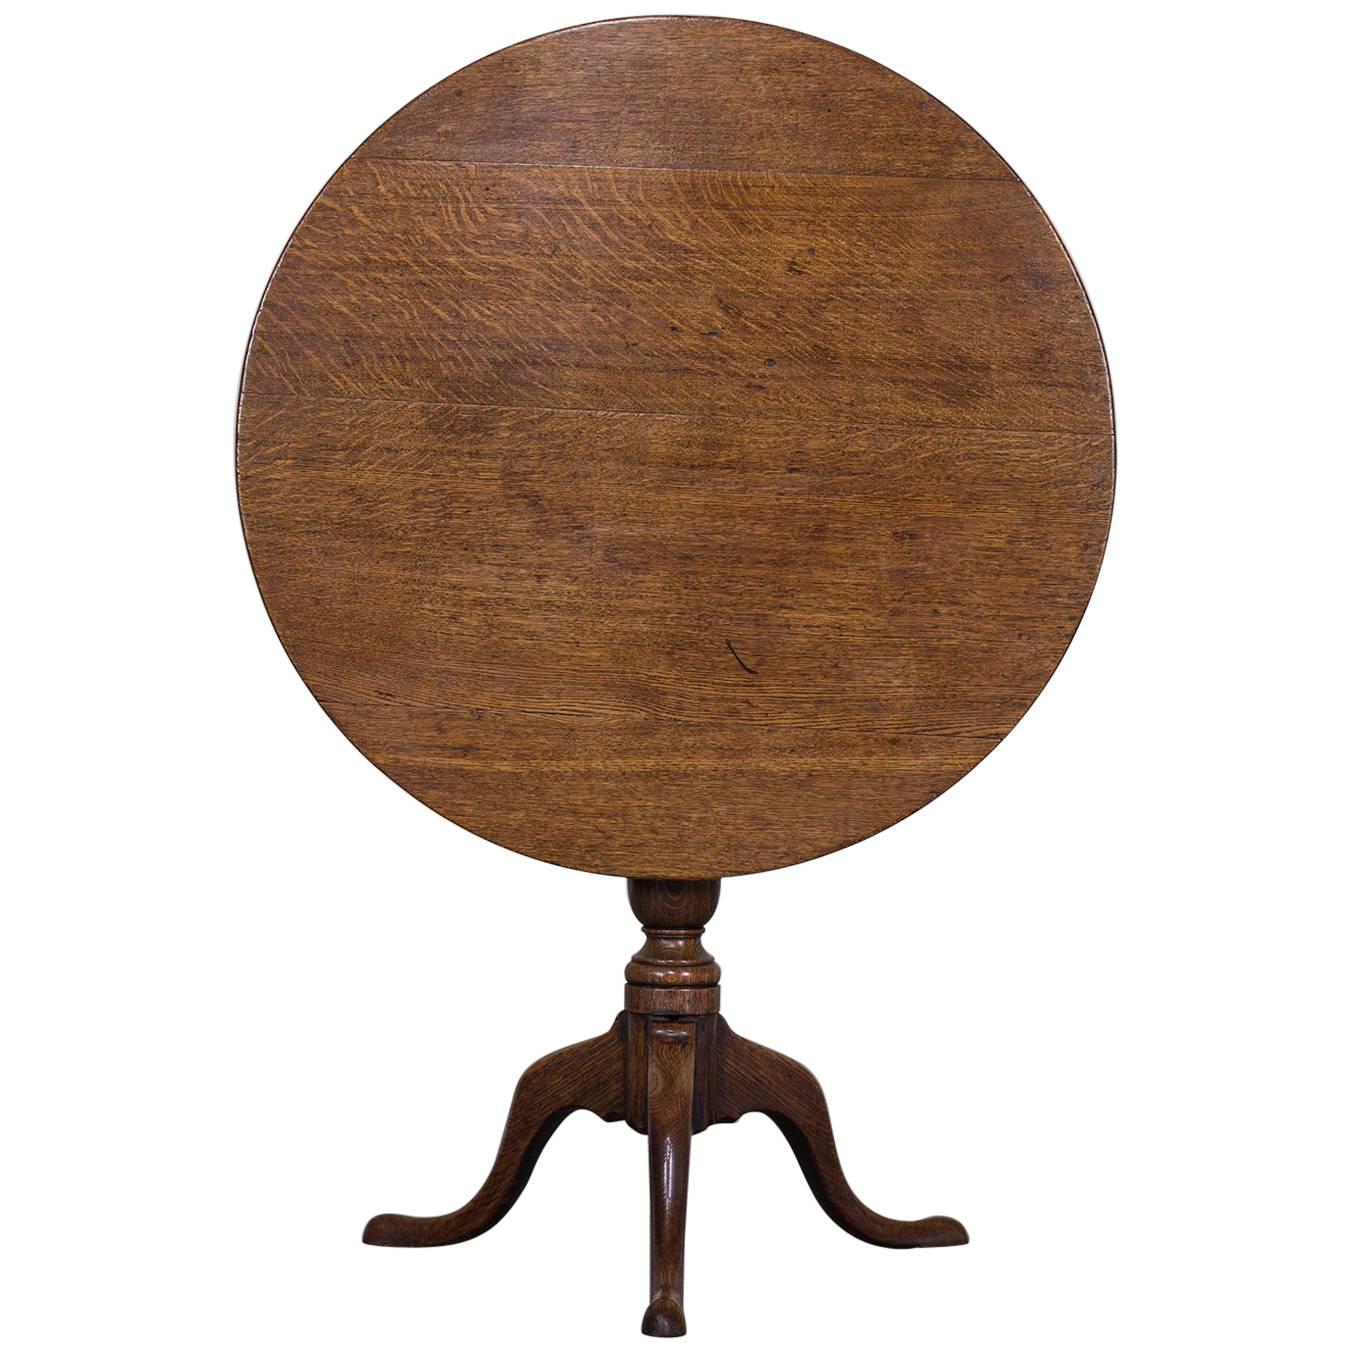 George III Period Antique English Oak Tilt-Top Table, circa 1790